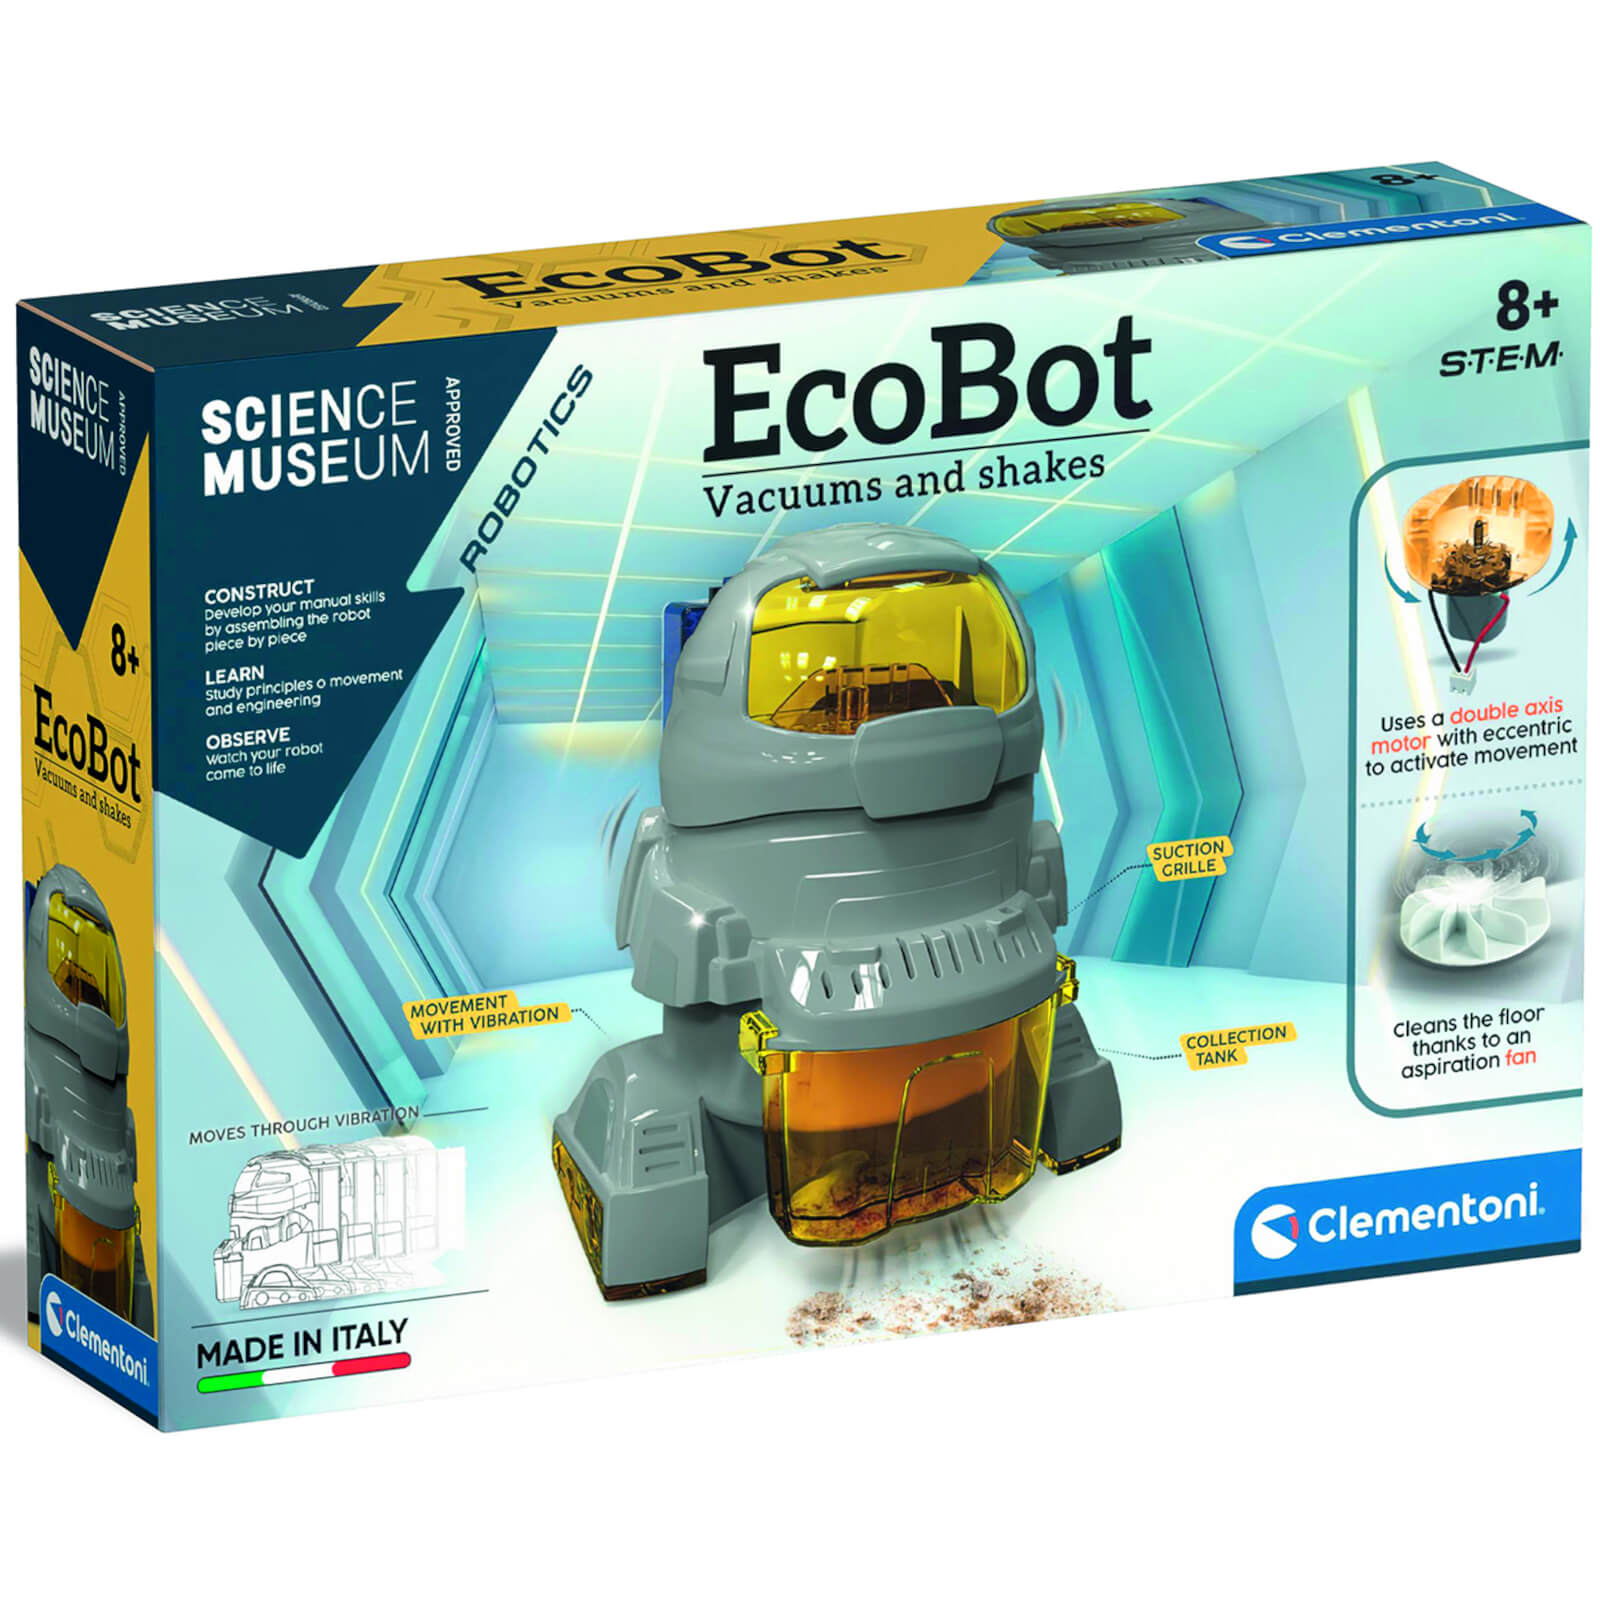 Clementoni Ecobot Robotic Toy